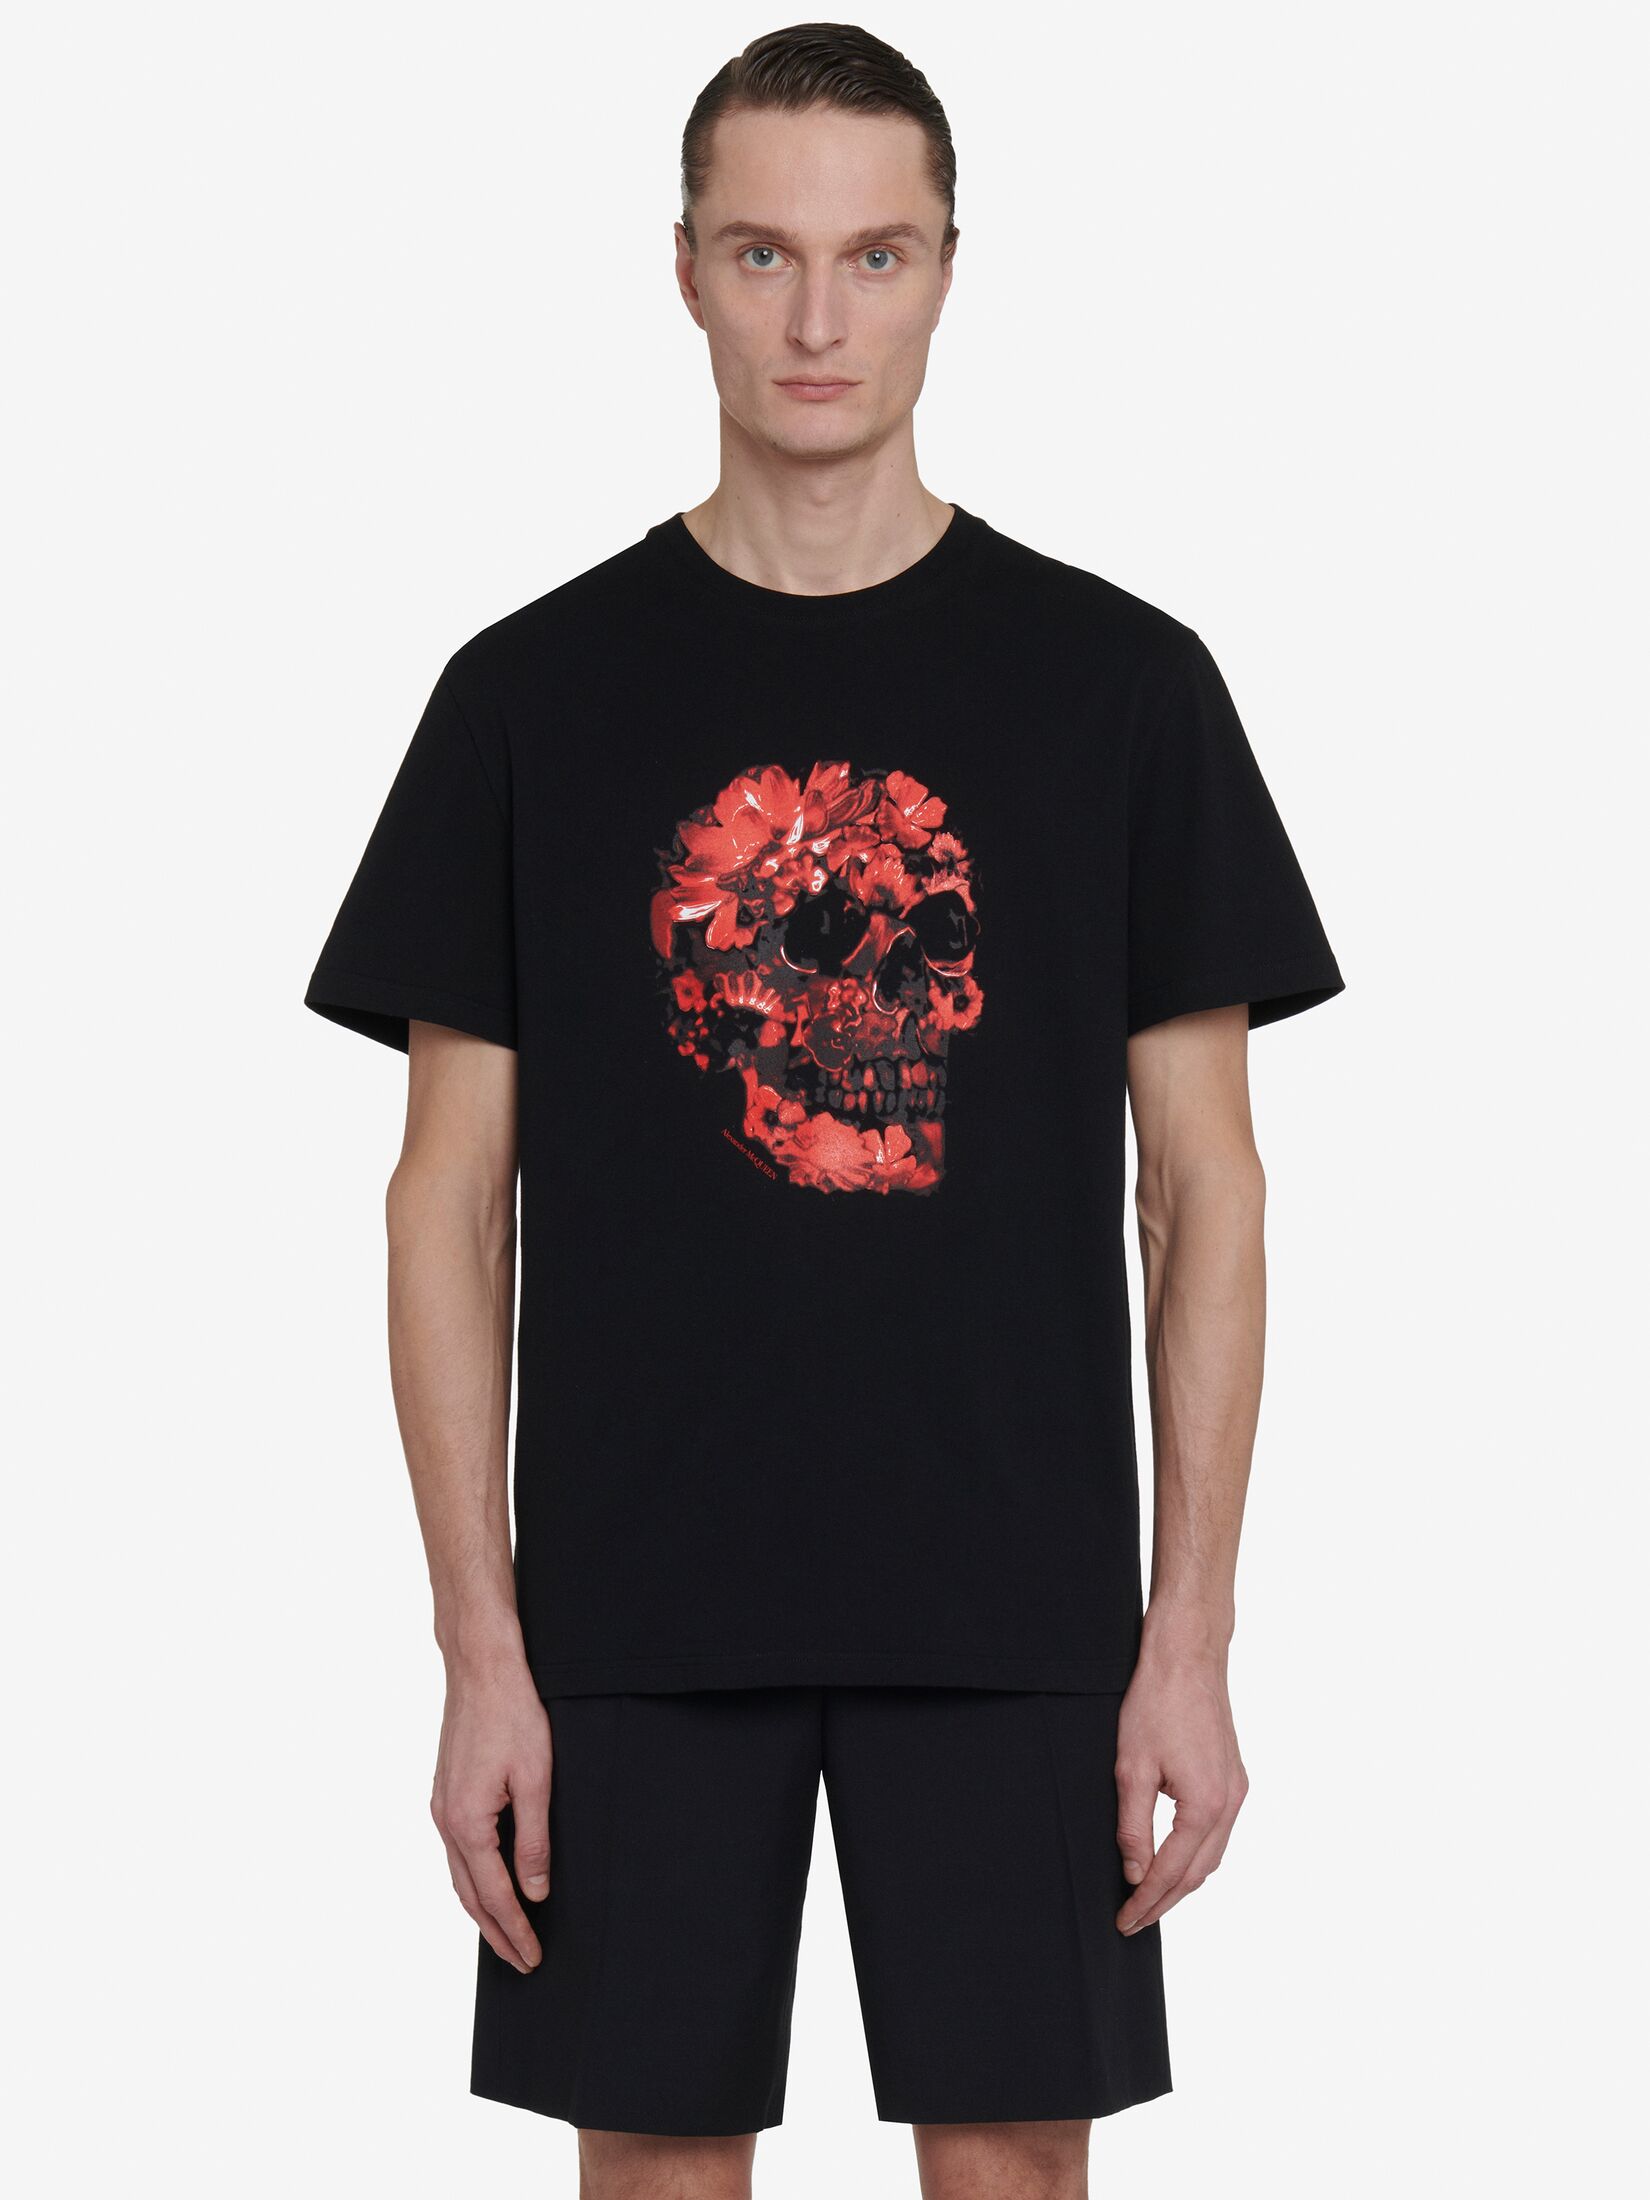 Wax Flower Skull T-shirt